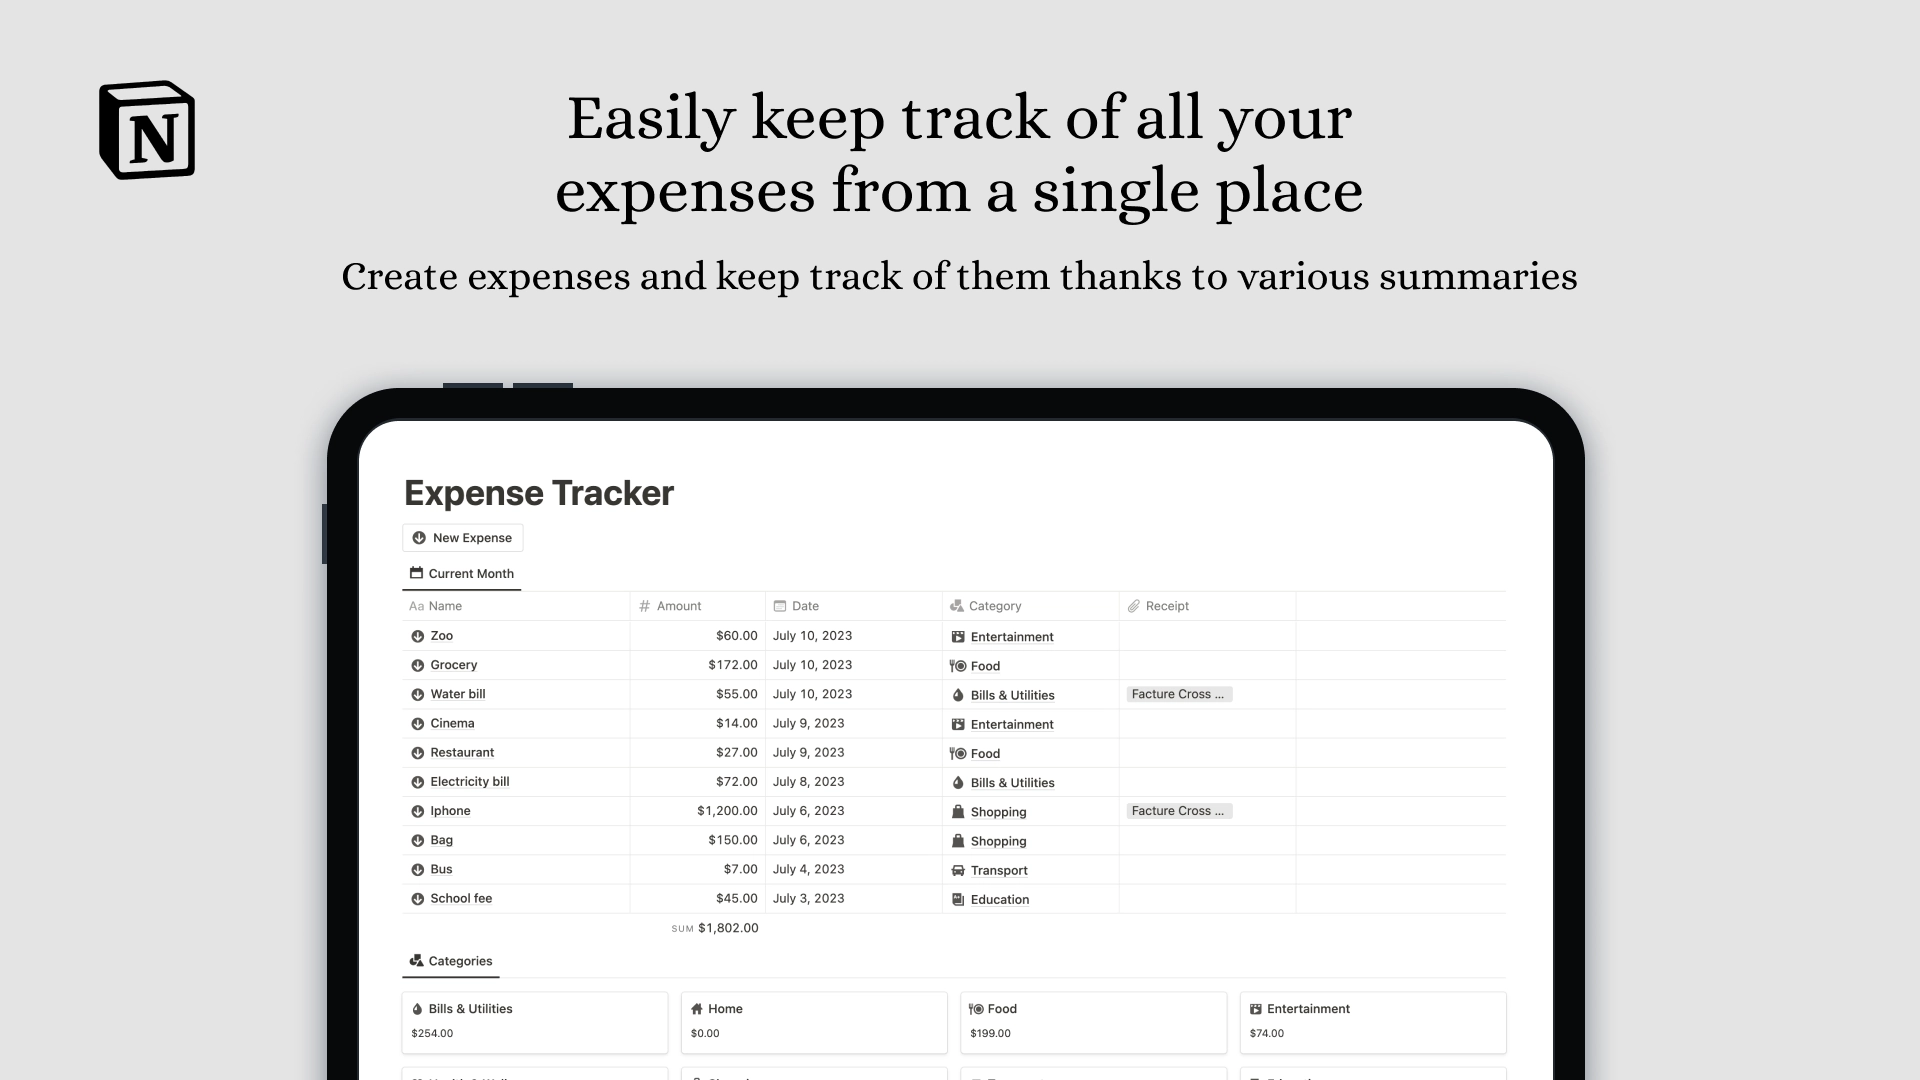 Notion Expense Tracker